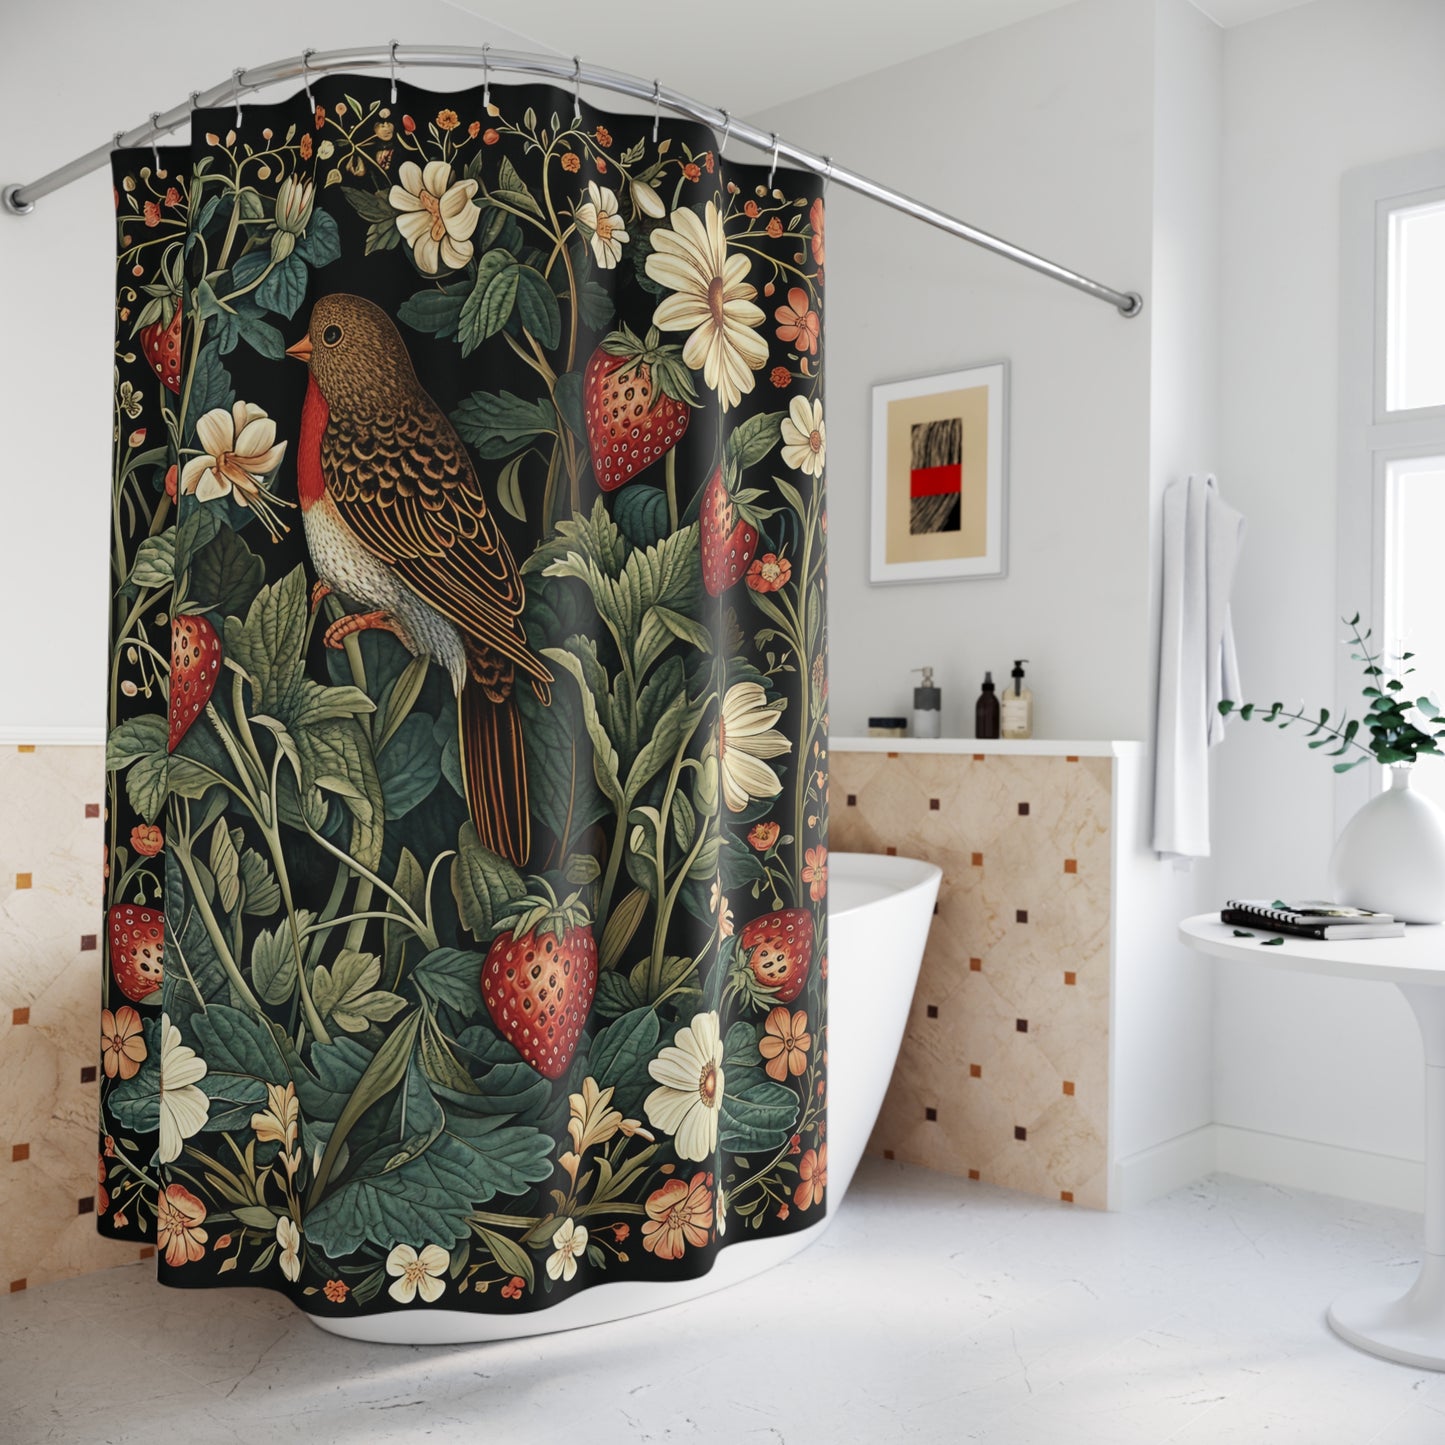 Bird in Strawberry Field Shower Curtain, William Morris Inspired, Farmhouse Bathroom, Floral Shower Curtain, 71in x 74in